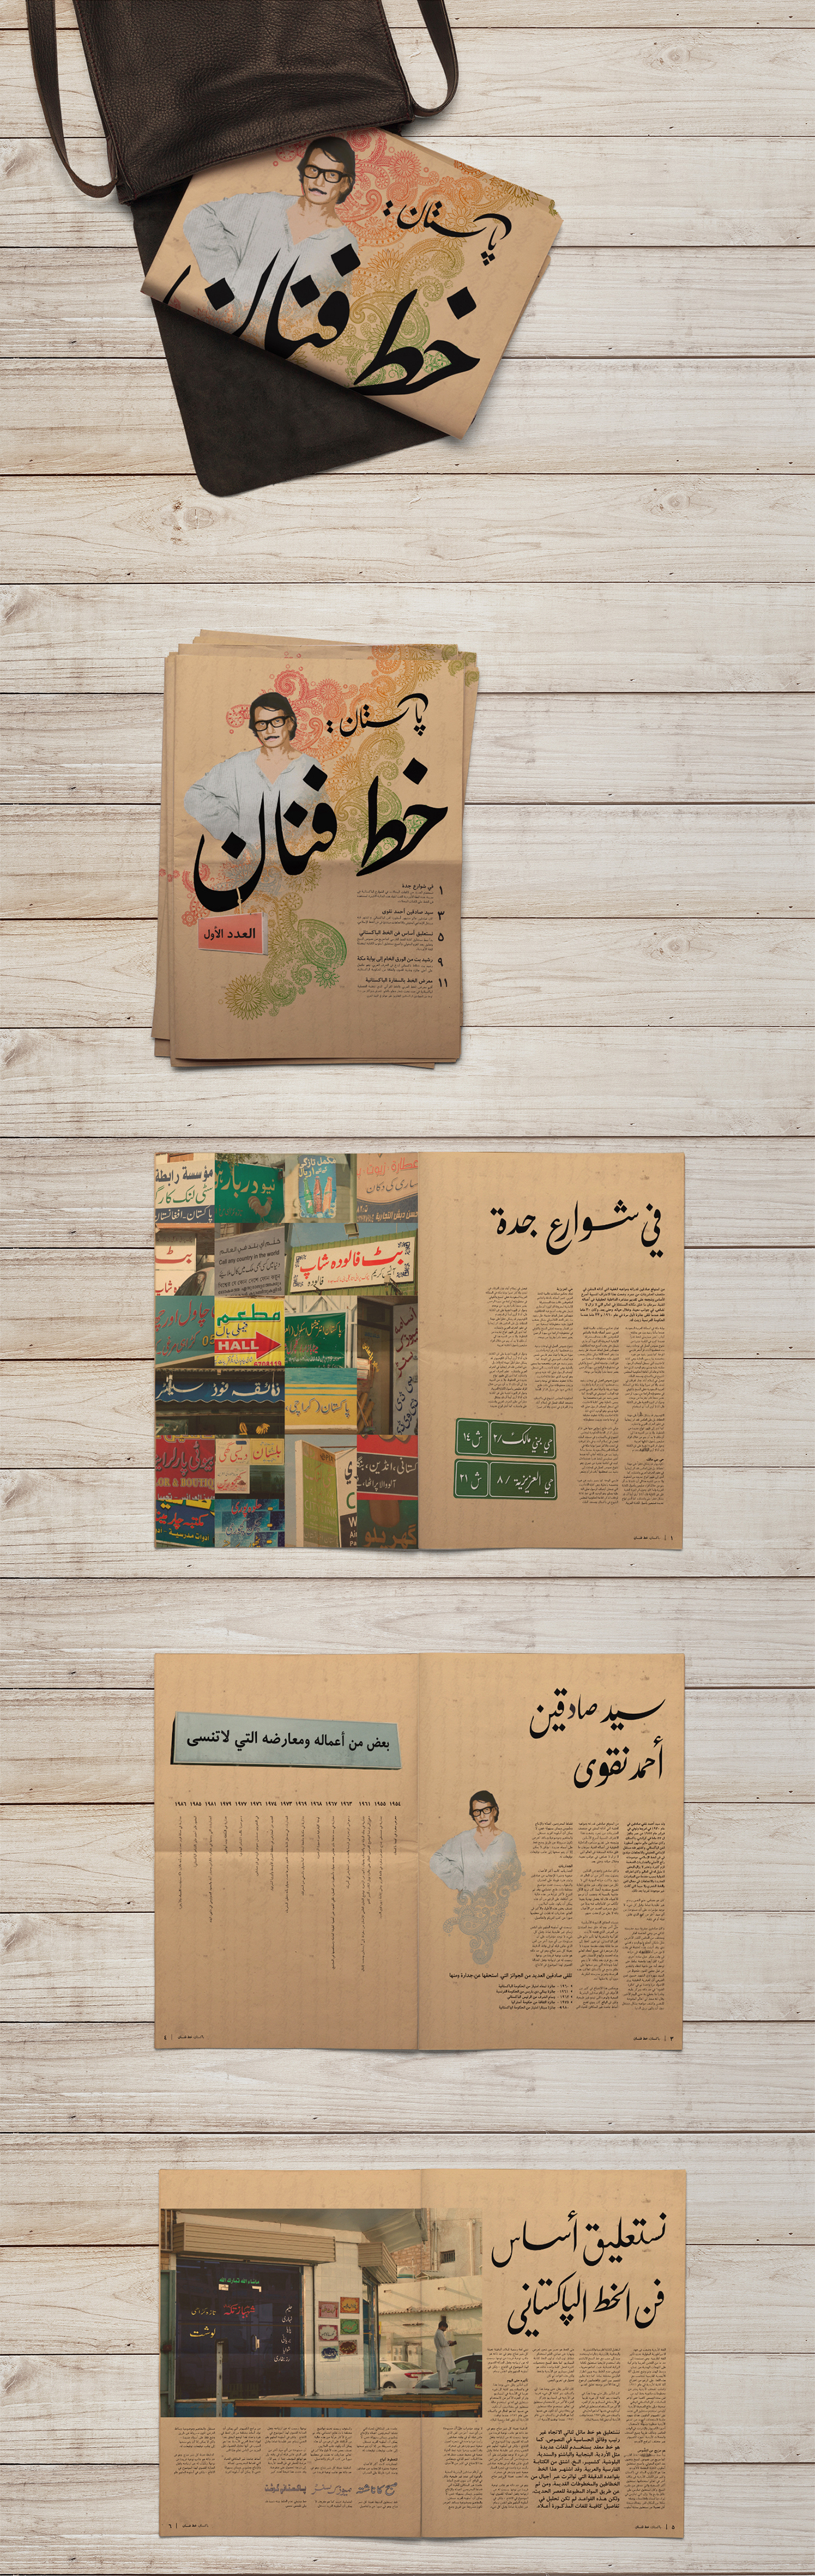 newsletter editorial newspaper Nastaliq arabic urdu Layout print publication vintage traditional illustrations jeddah Saudi Arabia photos